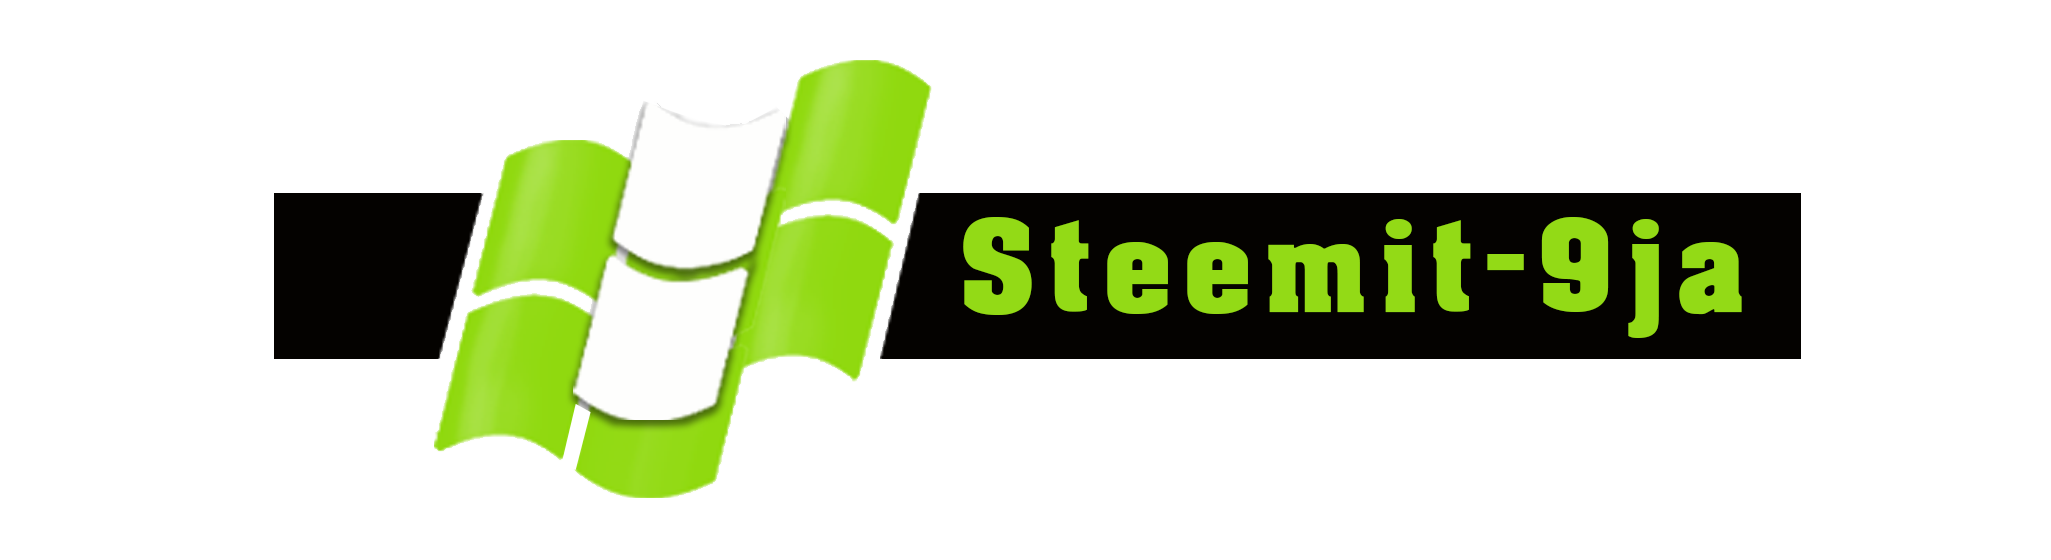 steemit9ja logo.png